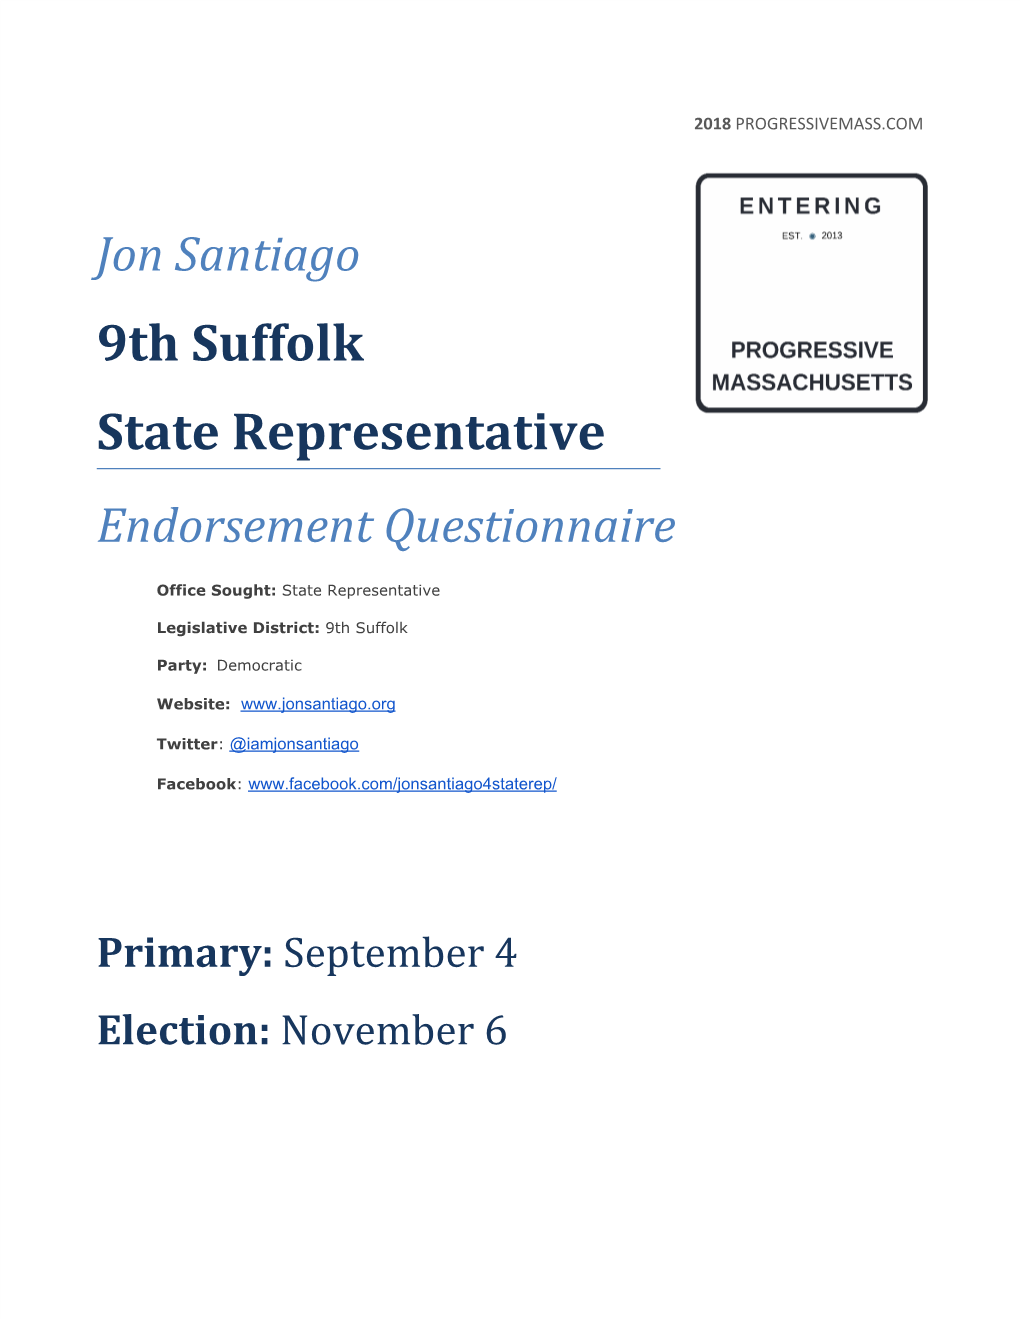 Jon Santiago 9Th Suffolk State Representative Endorsement Questionnaire